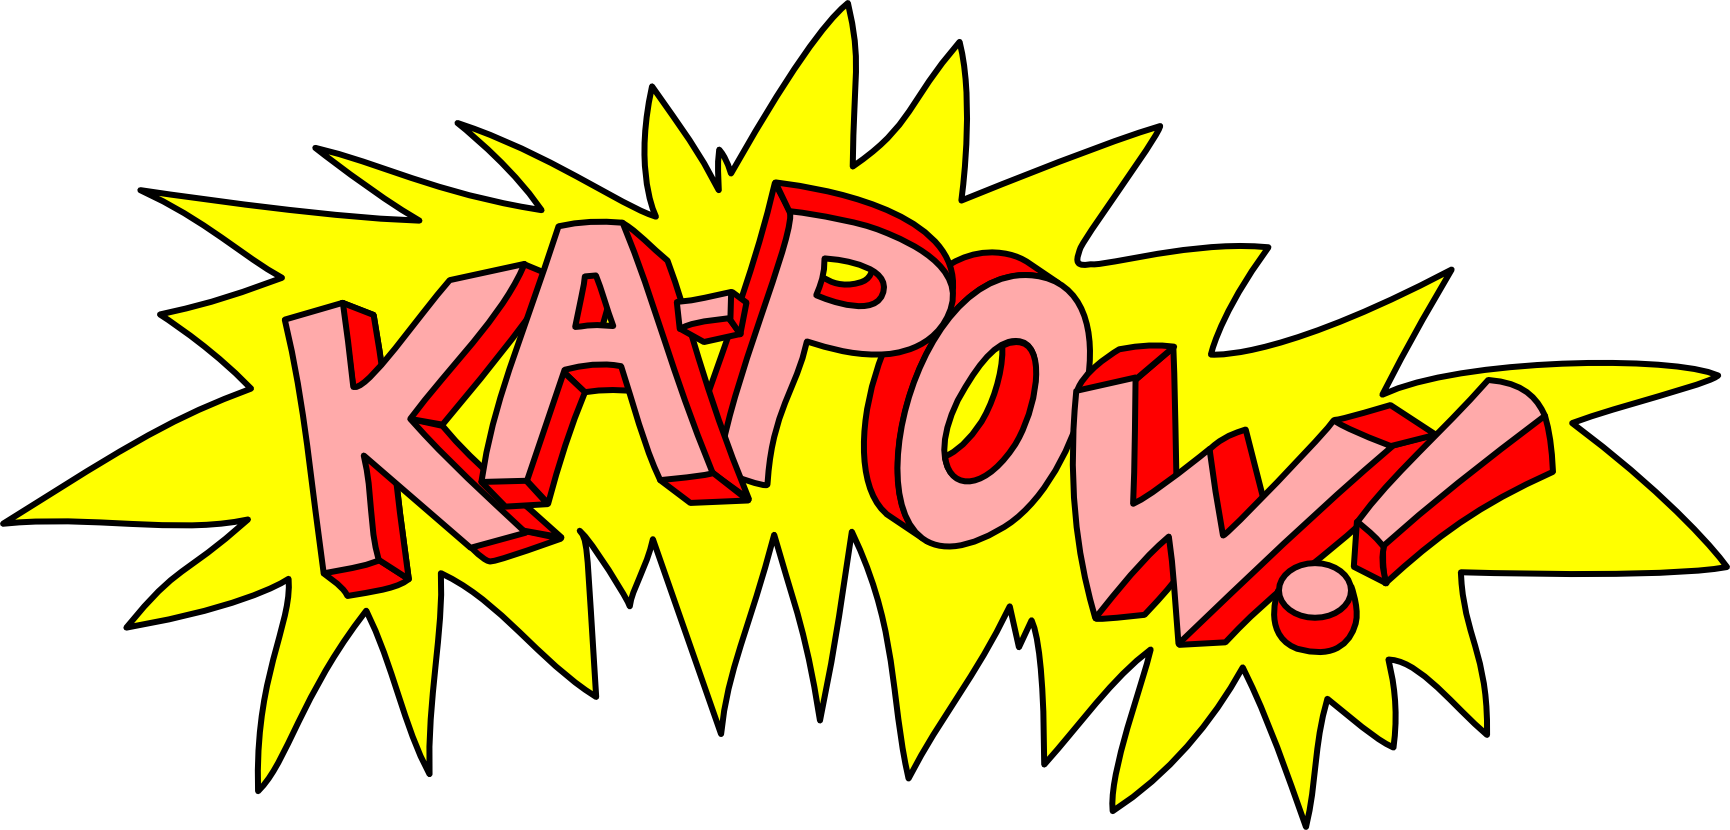 Free Batman Pow Font, Download Free Batman Pow Font png images, Free